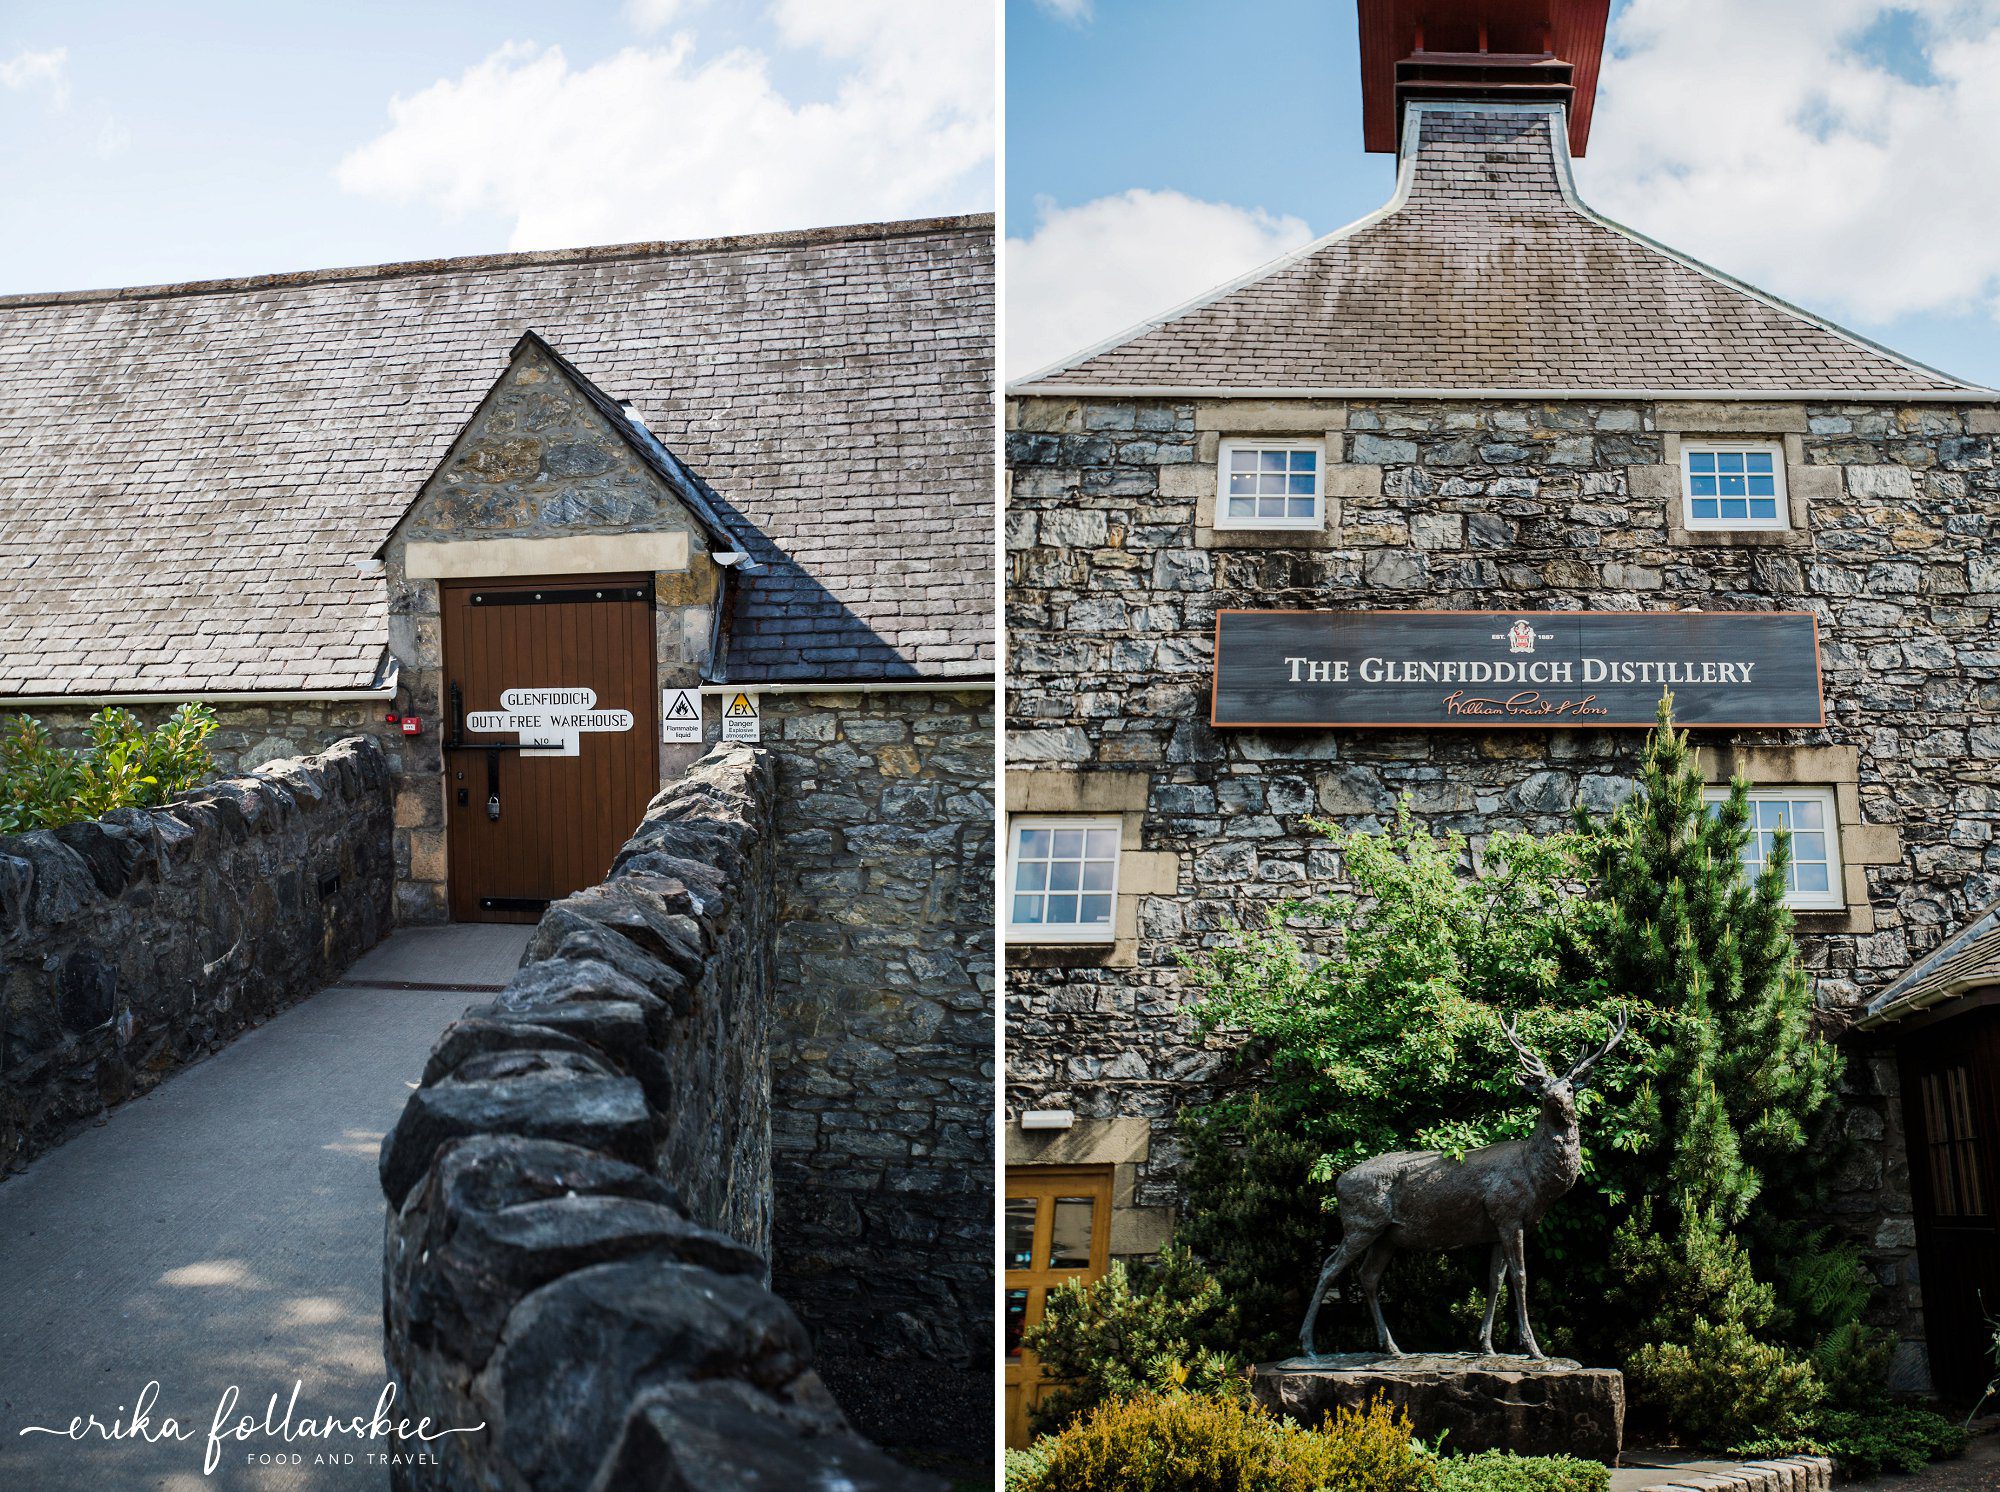 Glenfiddich Whisky Distillery Tour | Dufftown, Scotland